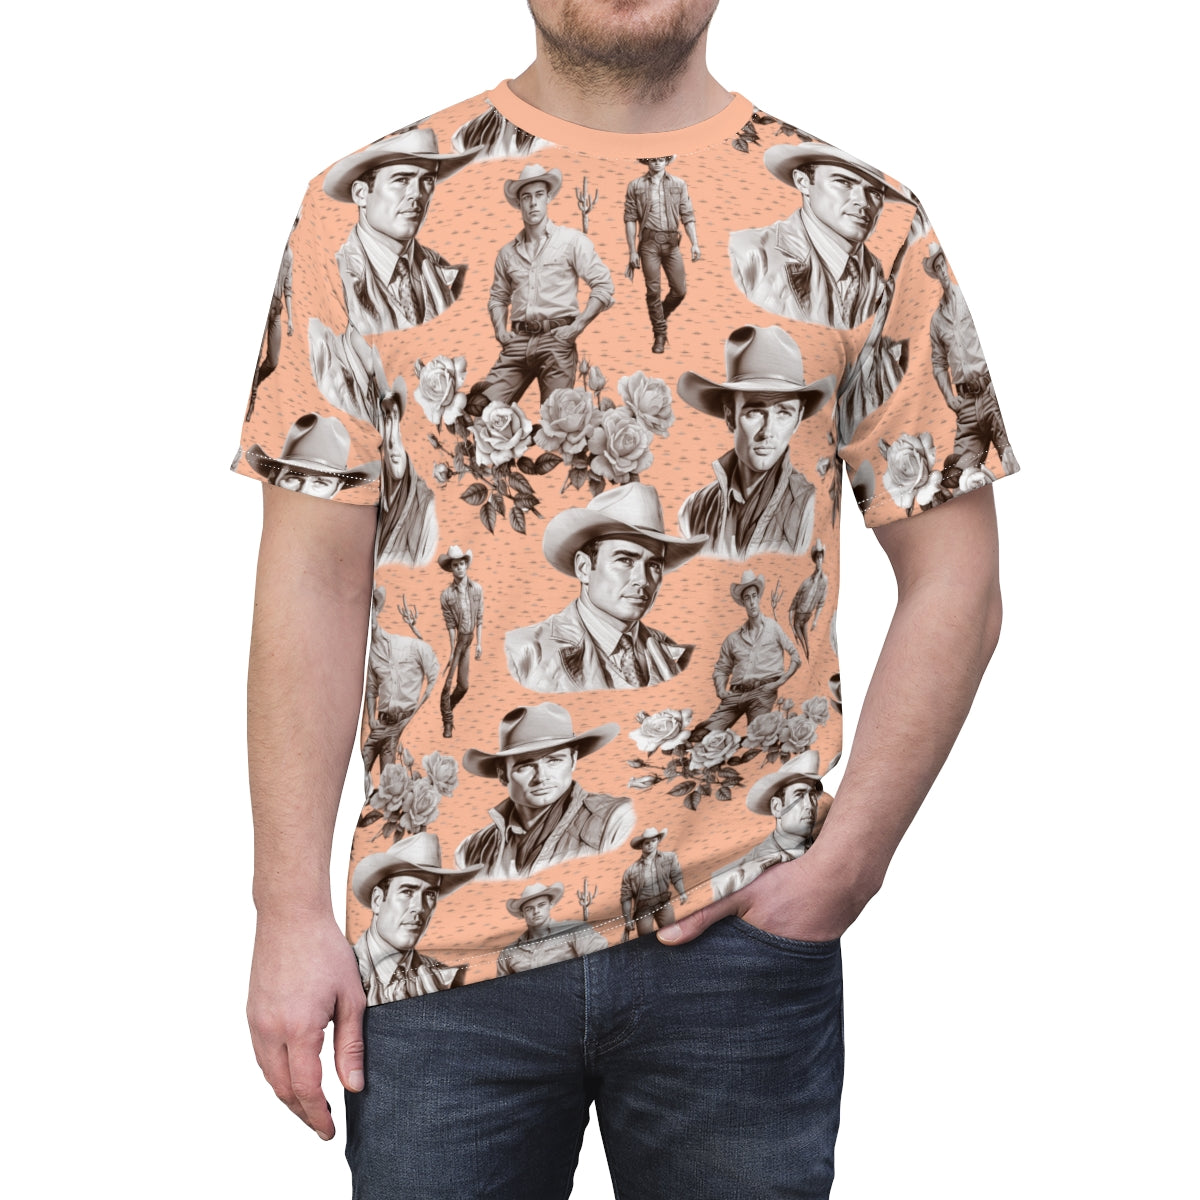 Handsome Cowboys Toile (Peach) T-Shirt by Studio Ten Design